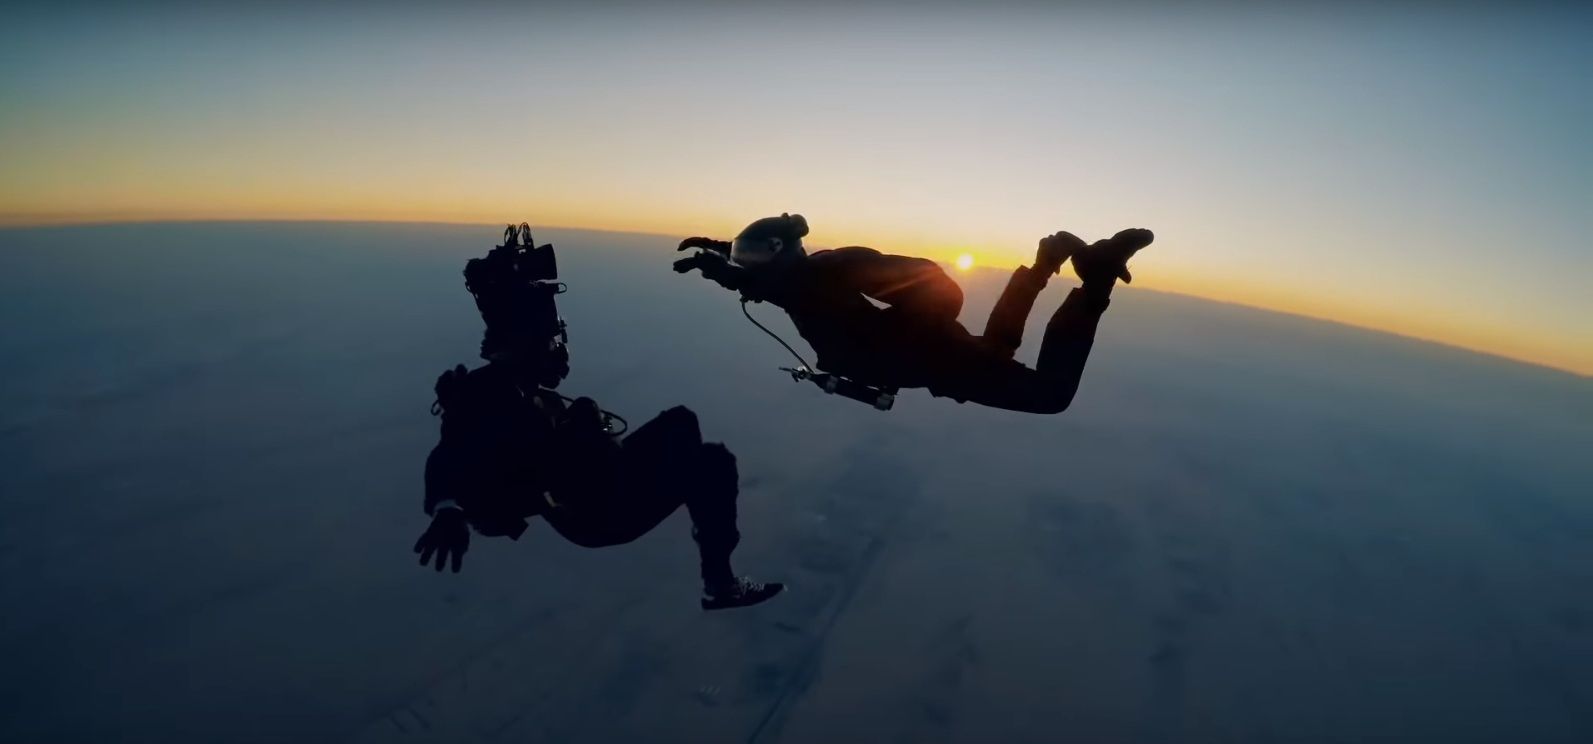 Mission Impossible - Fallout : Tom Cruise fait du Halo Jump dans un making-of